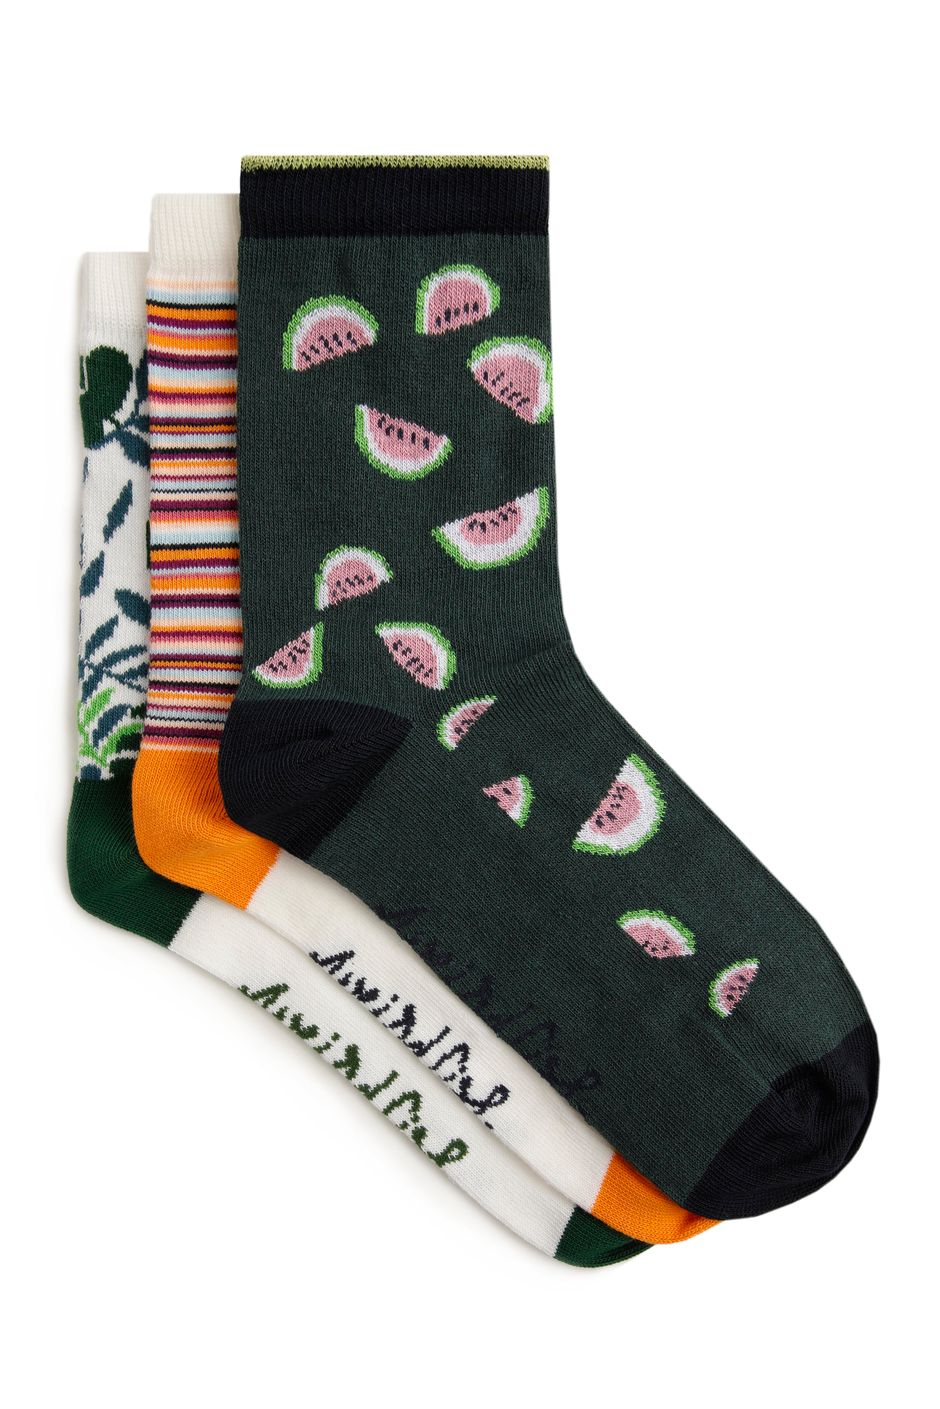 Parade Eco Patterned Socks 3 Pack Ivy